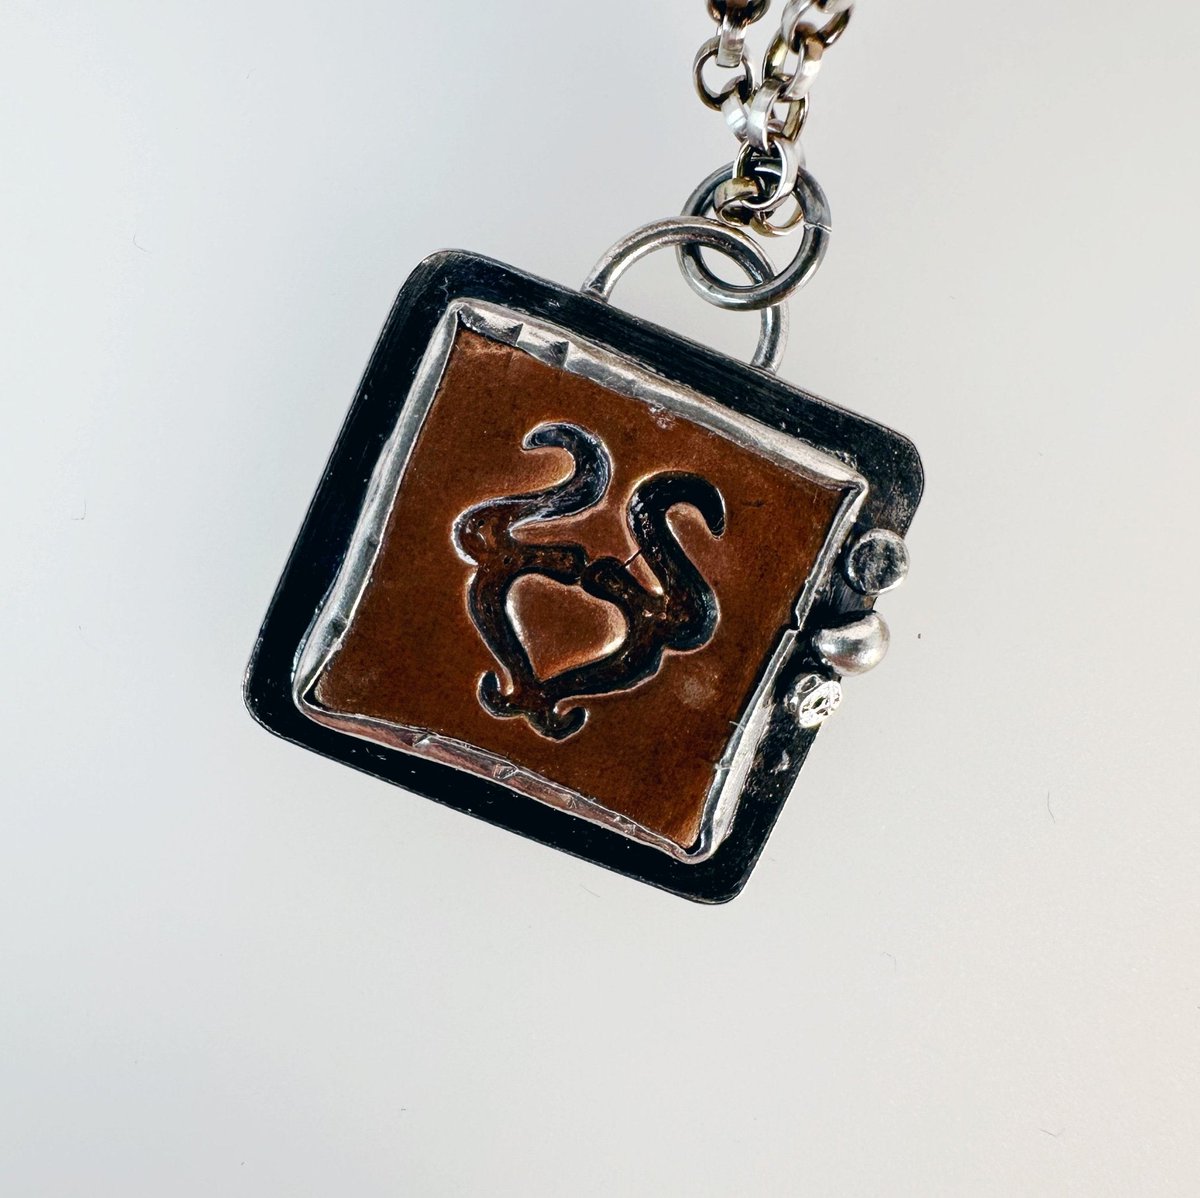 Copper and Sterling Silver Taurus Bull Pendant Necklace (Unisex) tuppu.net/ce18ac9b #MHHSBD #UKHashtags #bizbubble #giftideas #inbizhour ##UKGiftHour #shopsmall #HandmadeHour #Taurus